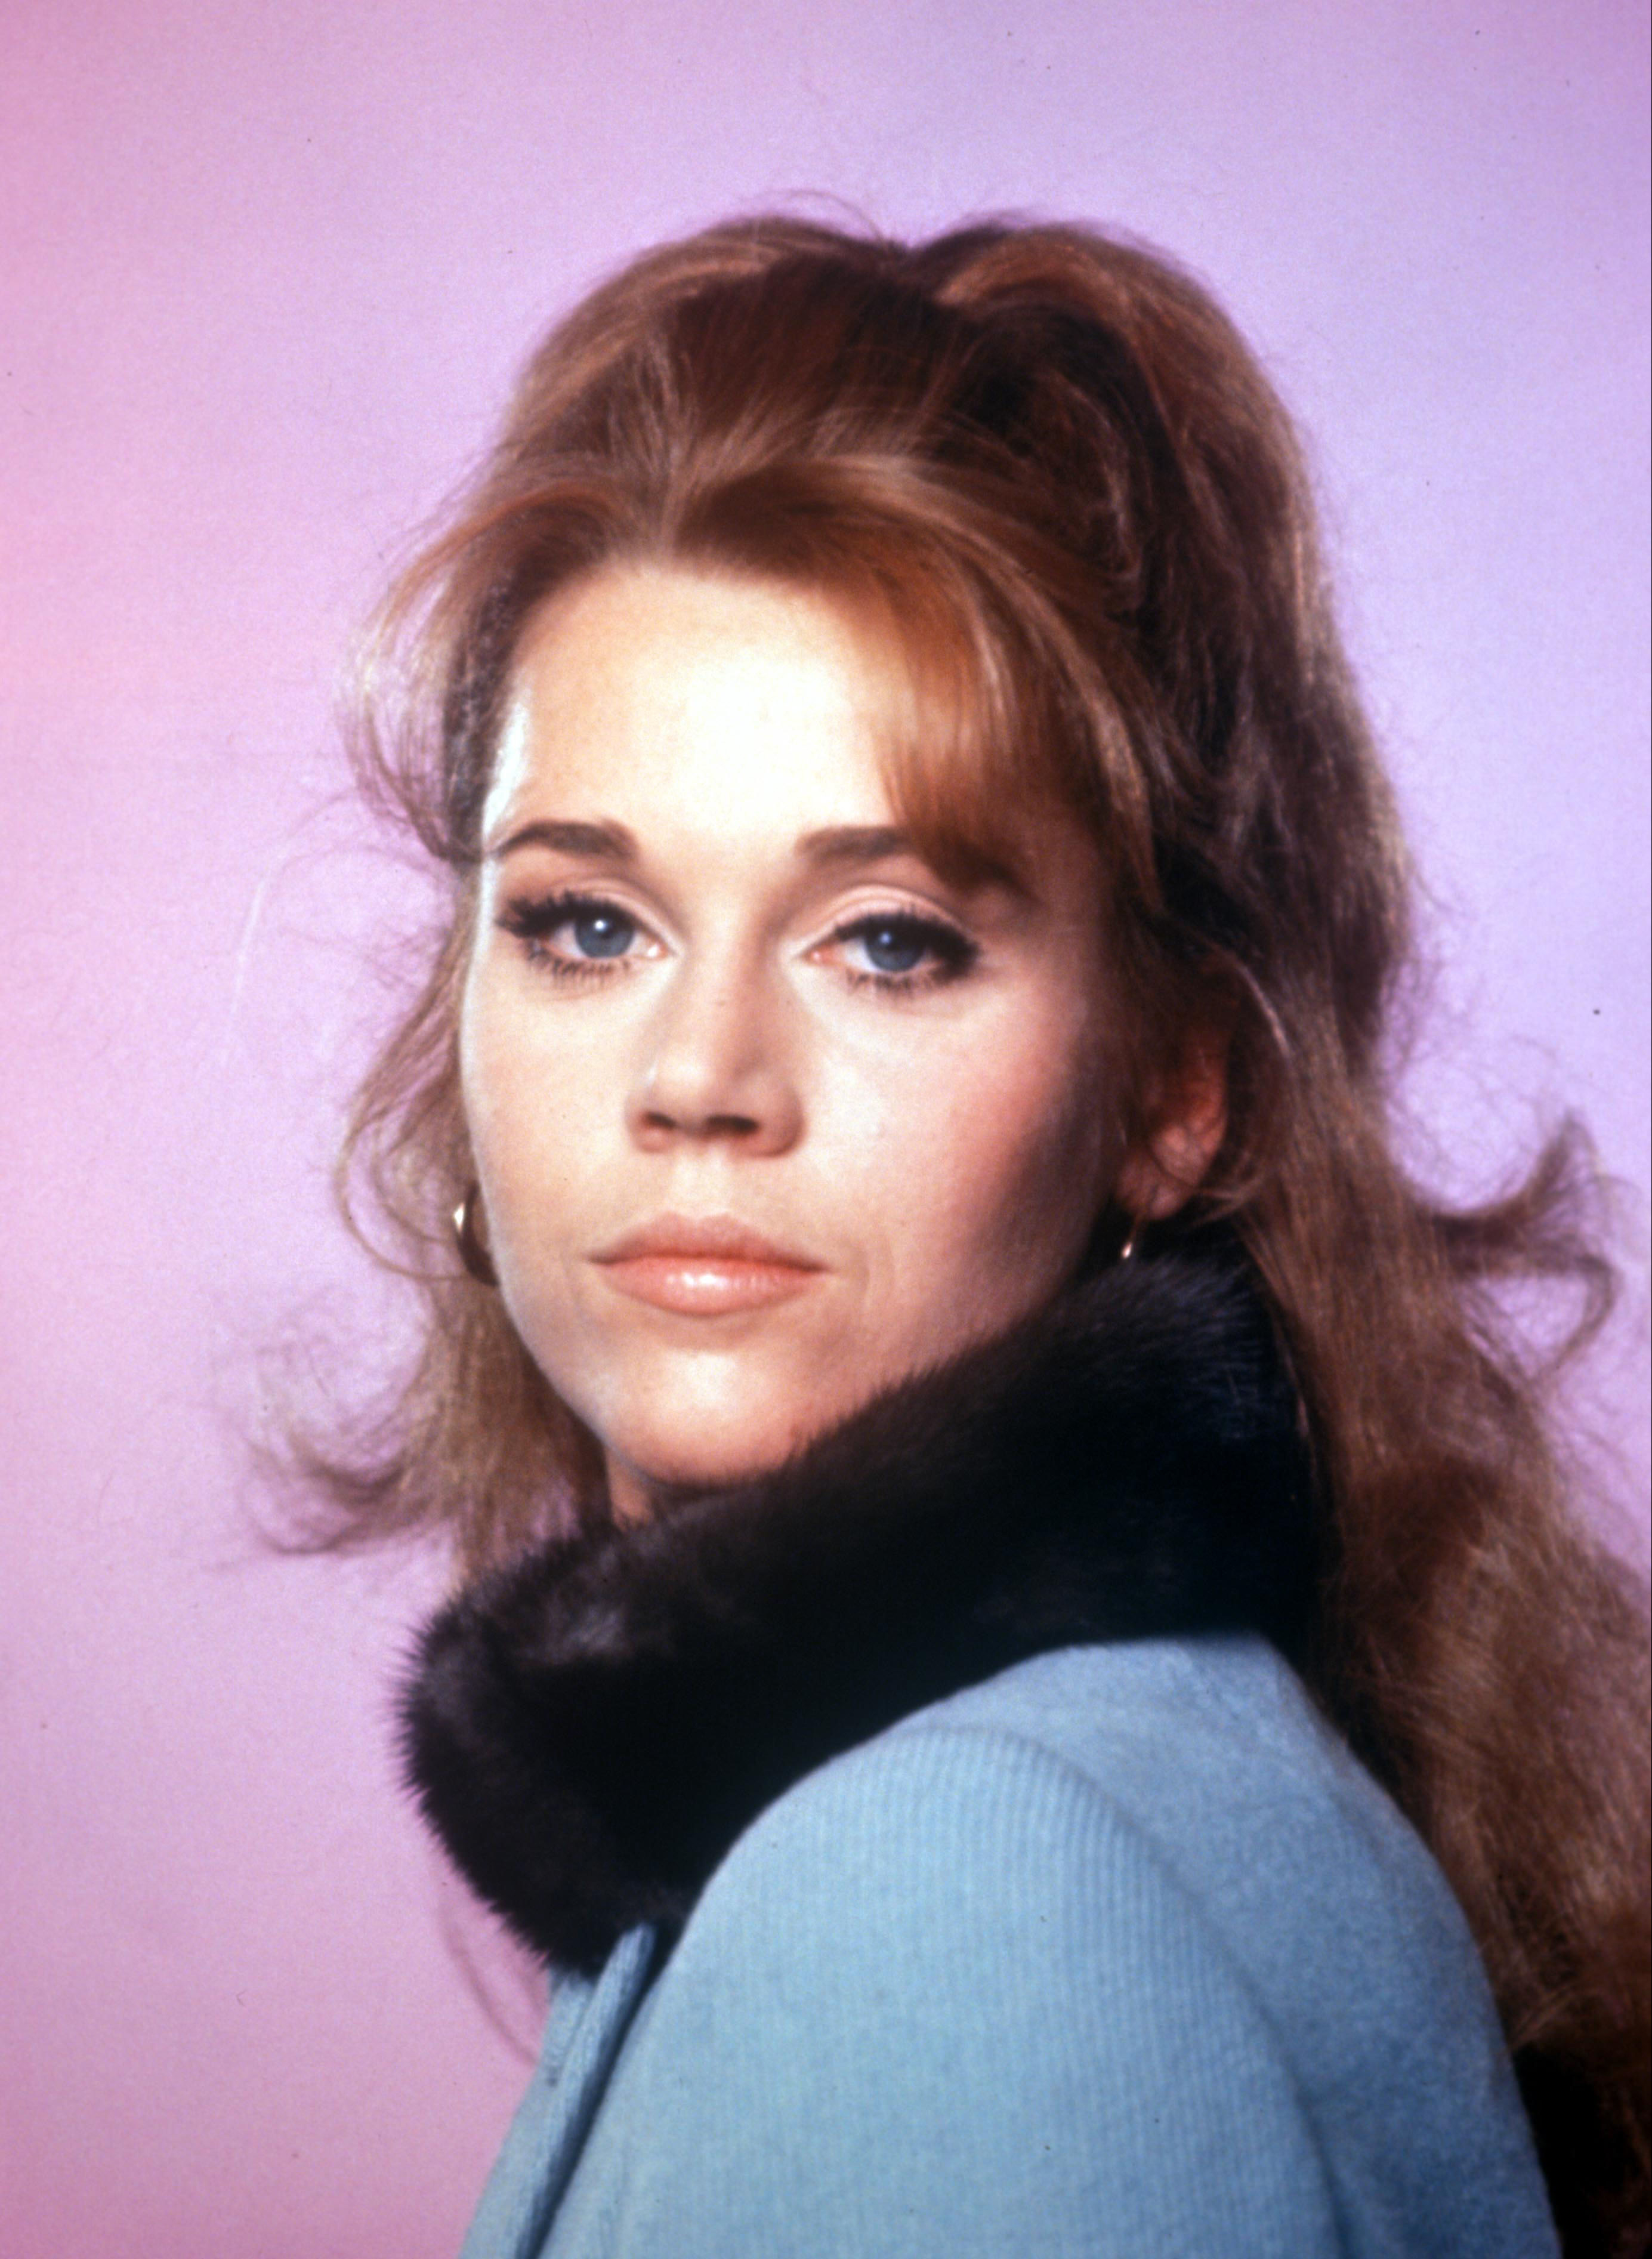 Closeup of Jane Fonda